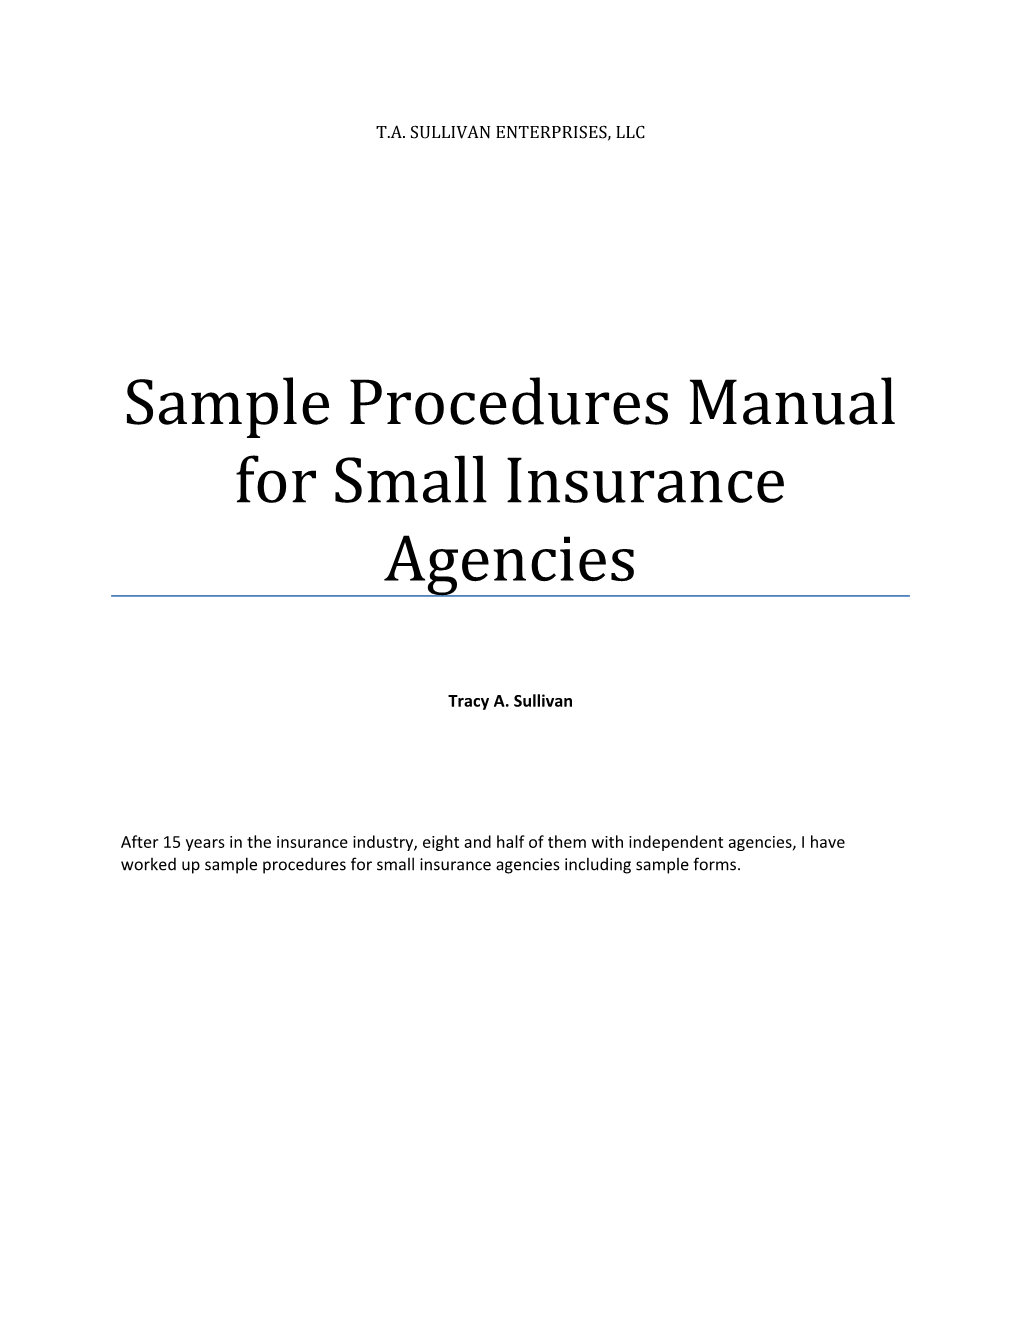 Sample Procedures Manual for Small Insurance Agencies